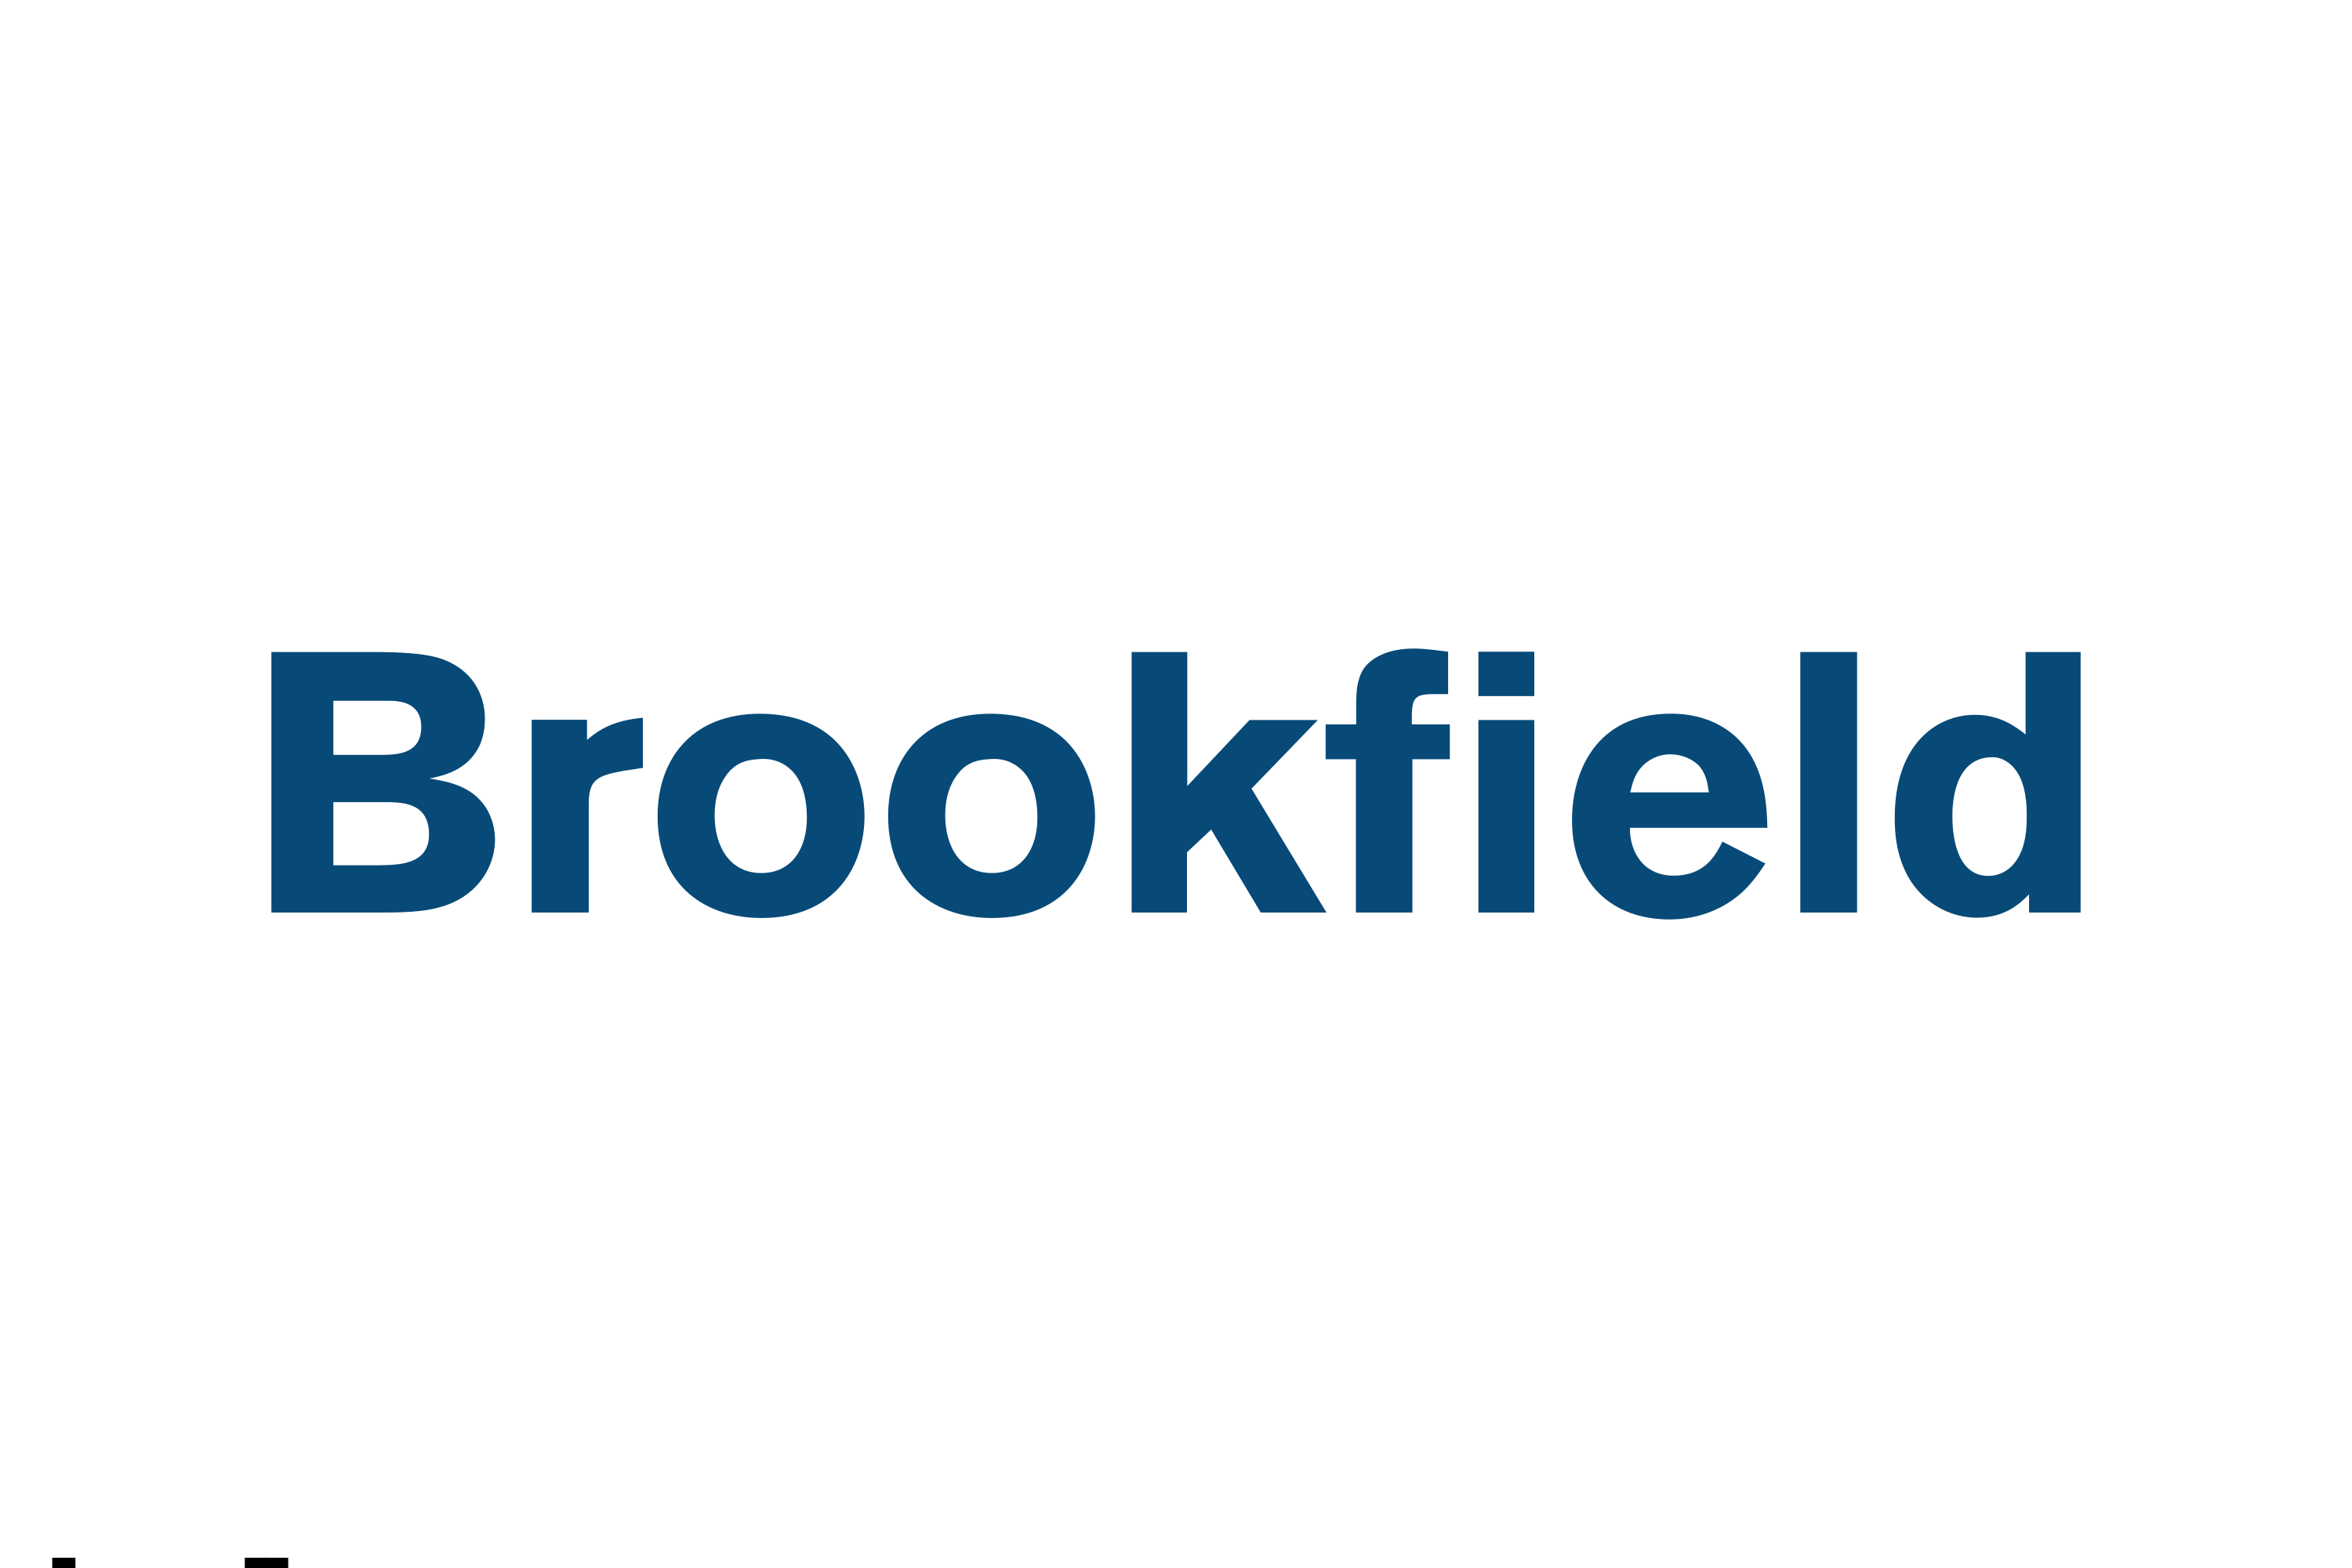 Brookfield Property Partners Logo